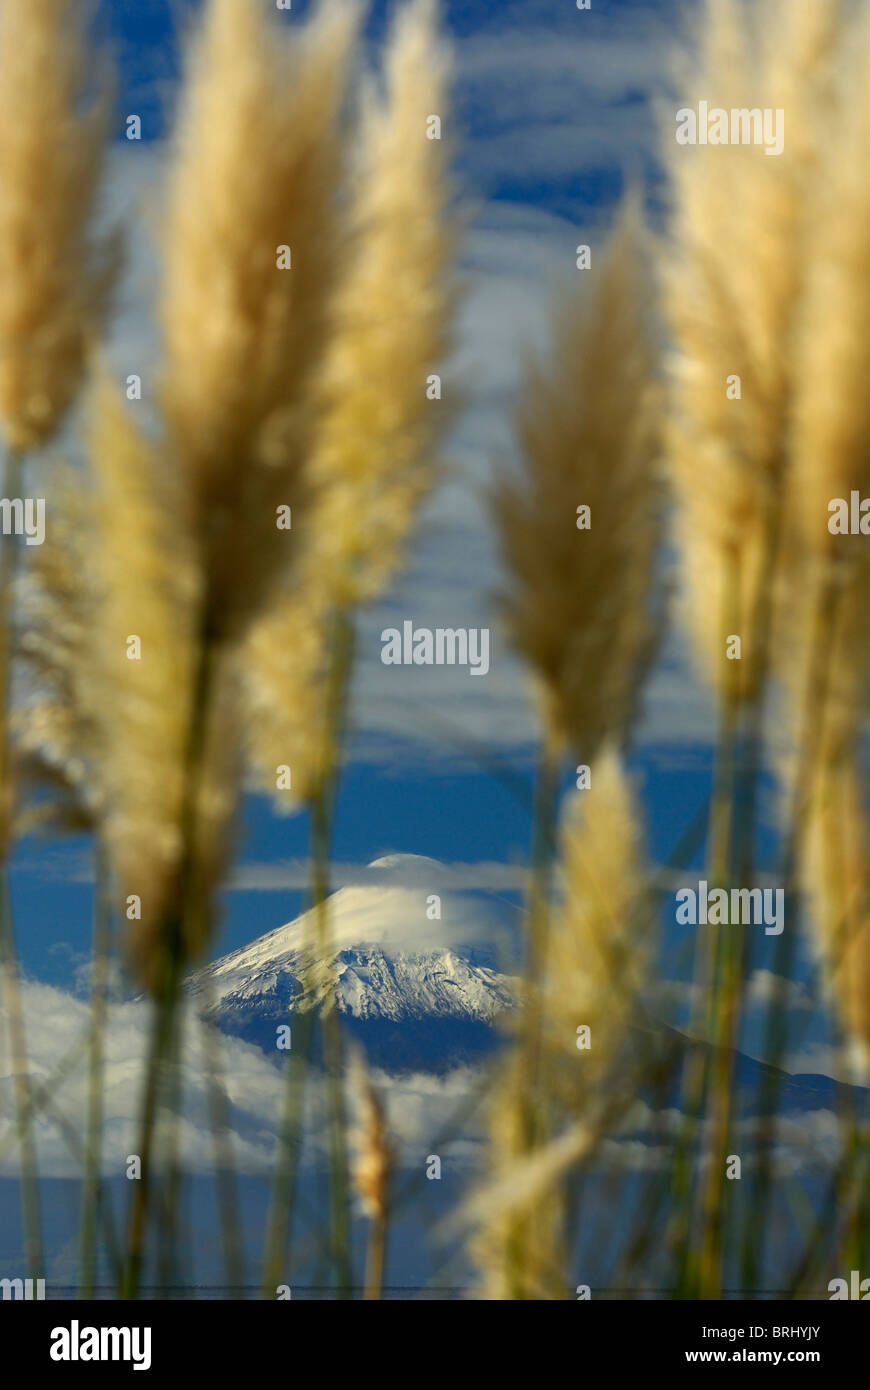 Volcano Osorno and Lake Llanquihue view from Frutillar in the X Region de los Lagos, Chile Stock Photo